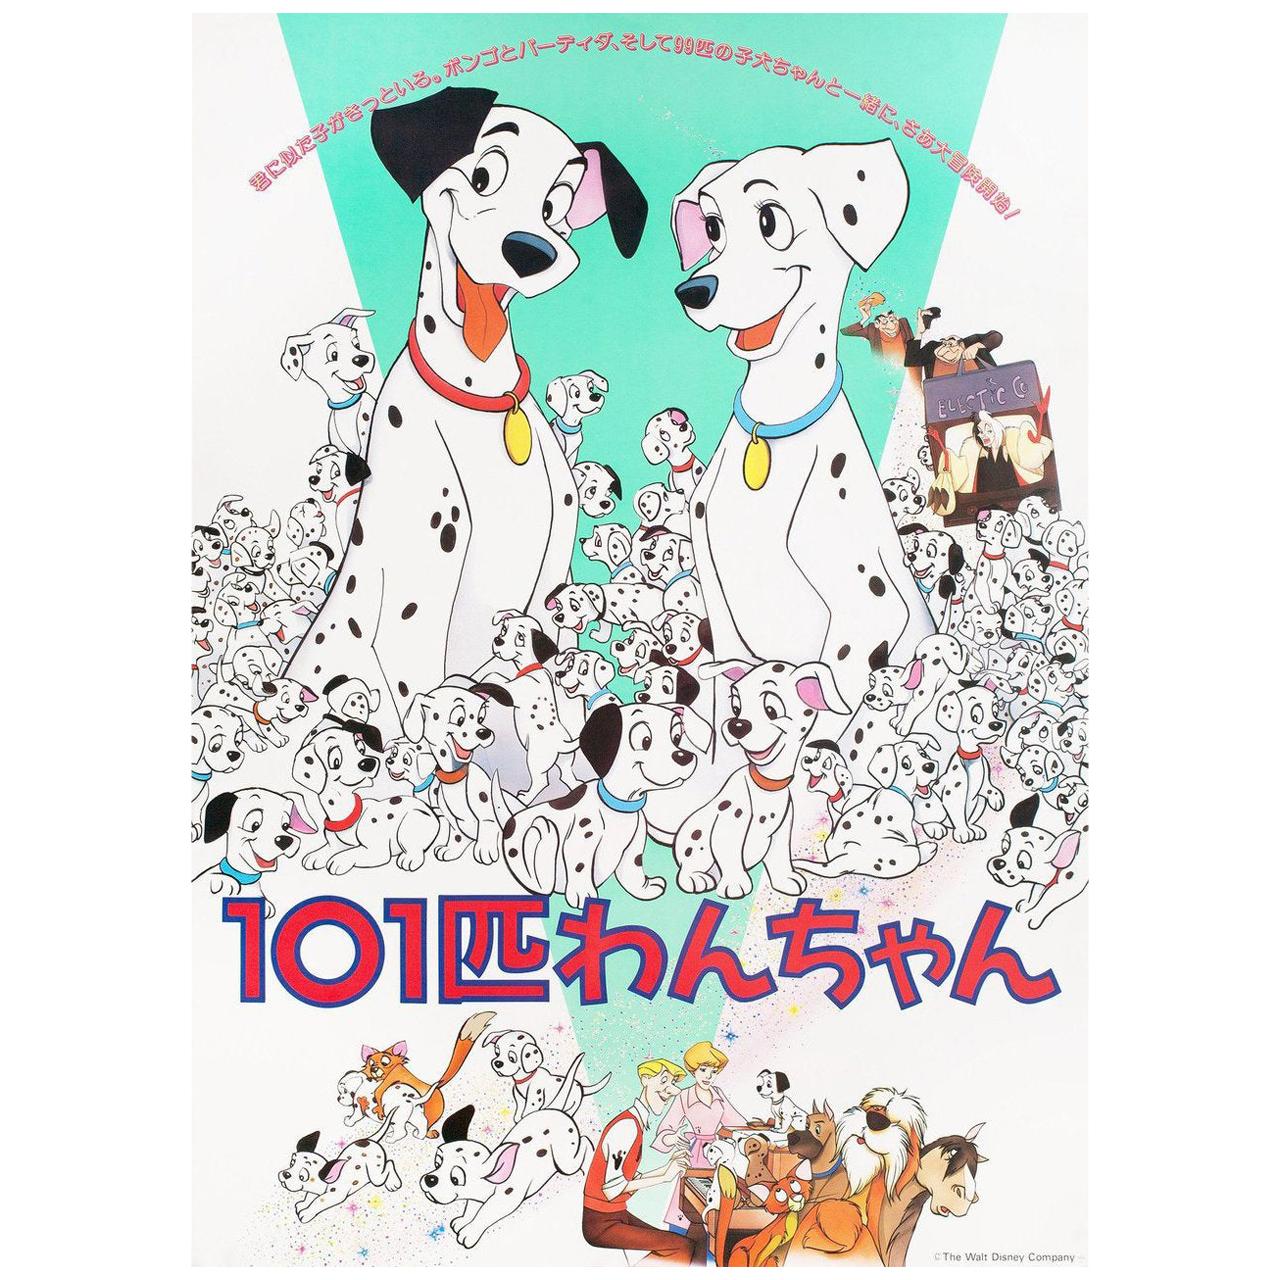 "101 Dalmatians" R1980s Japanese B2 Film Poster